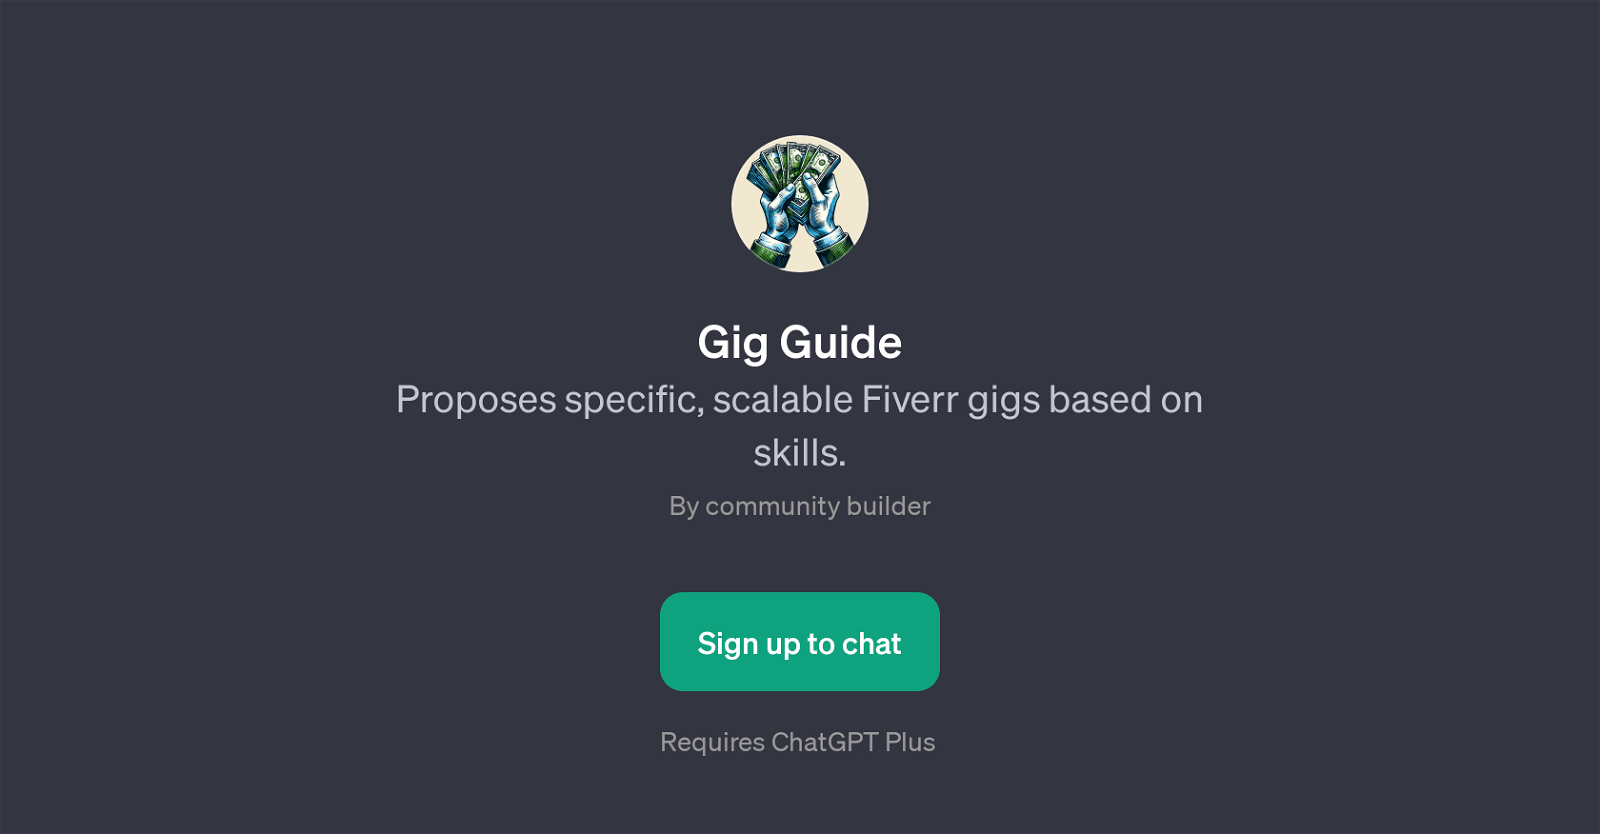 Gig Guide website